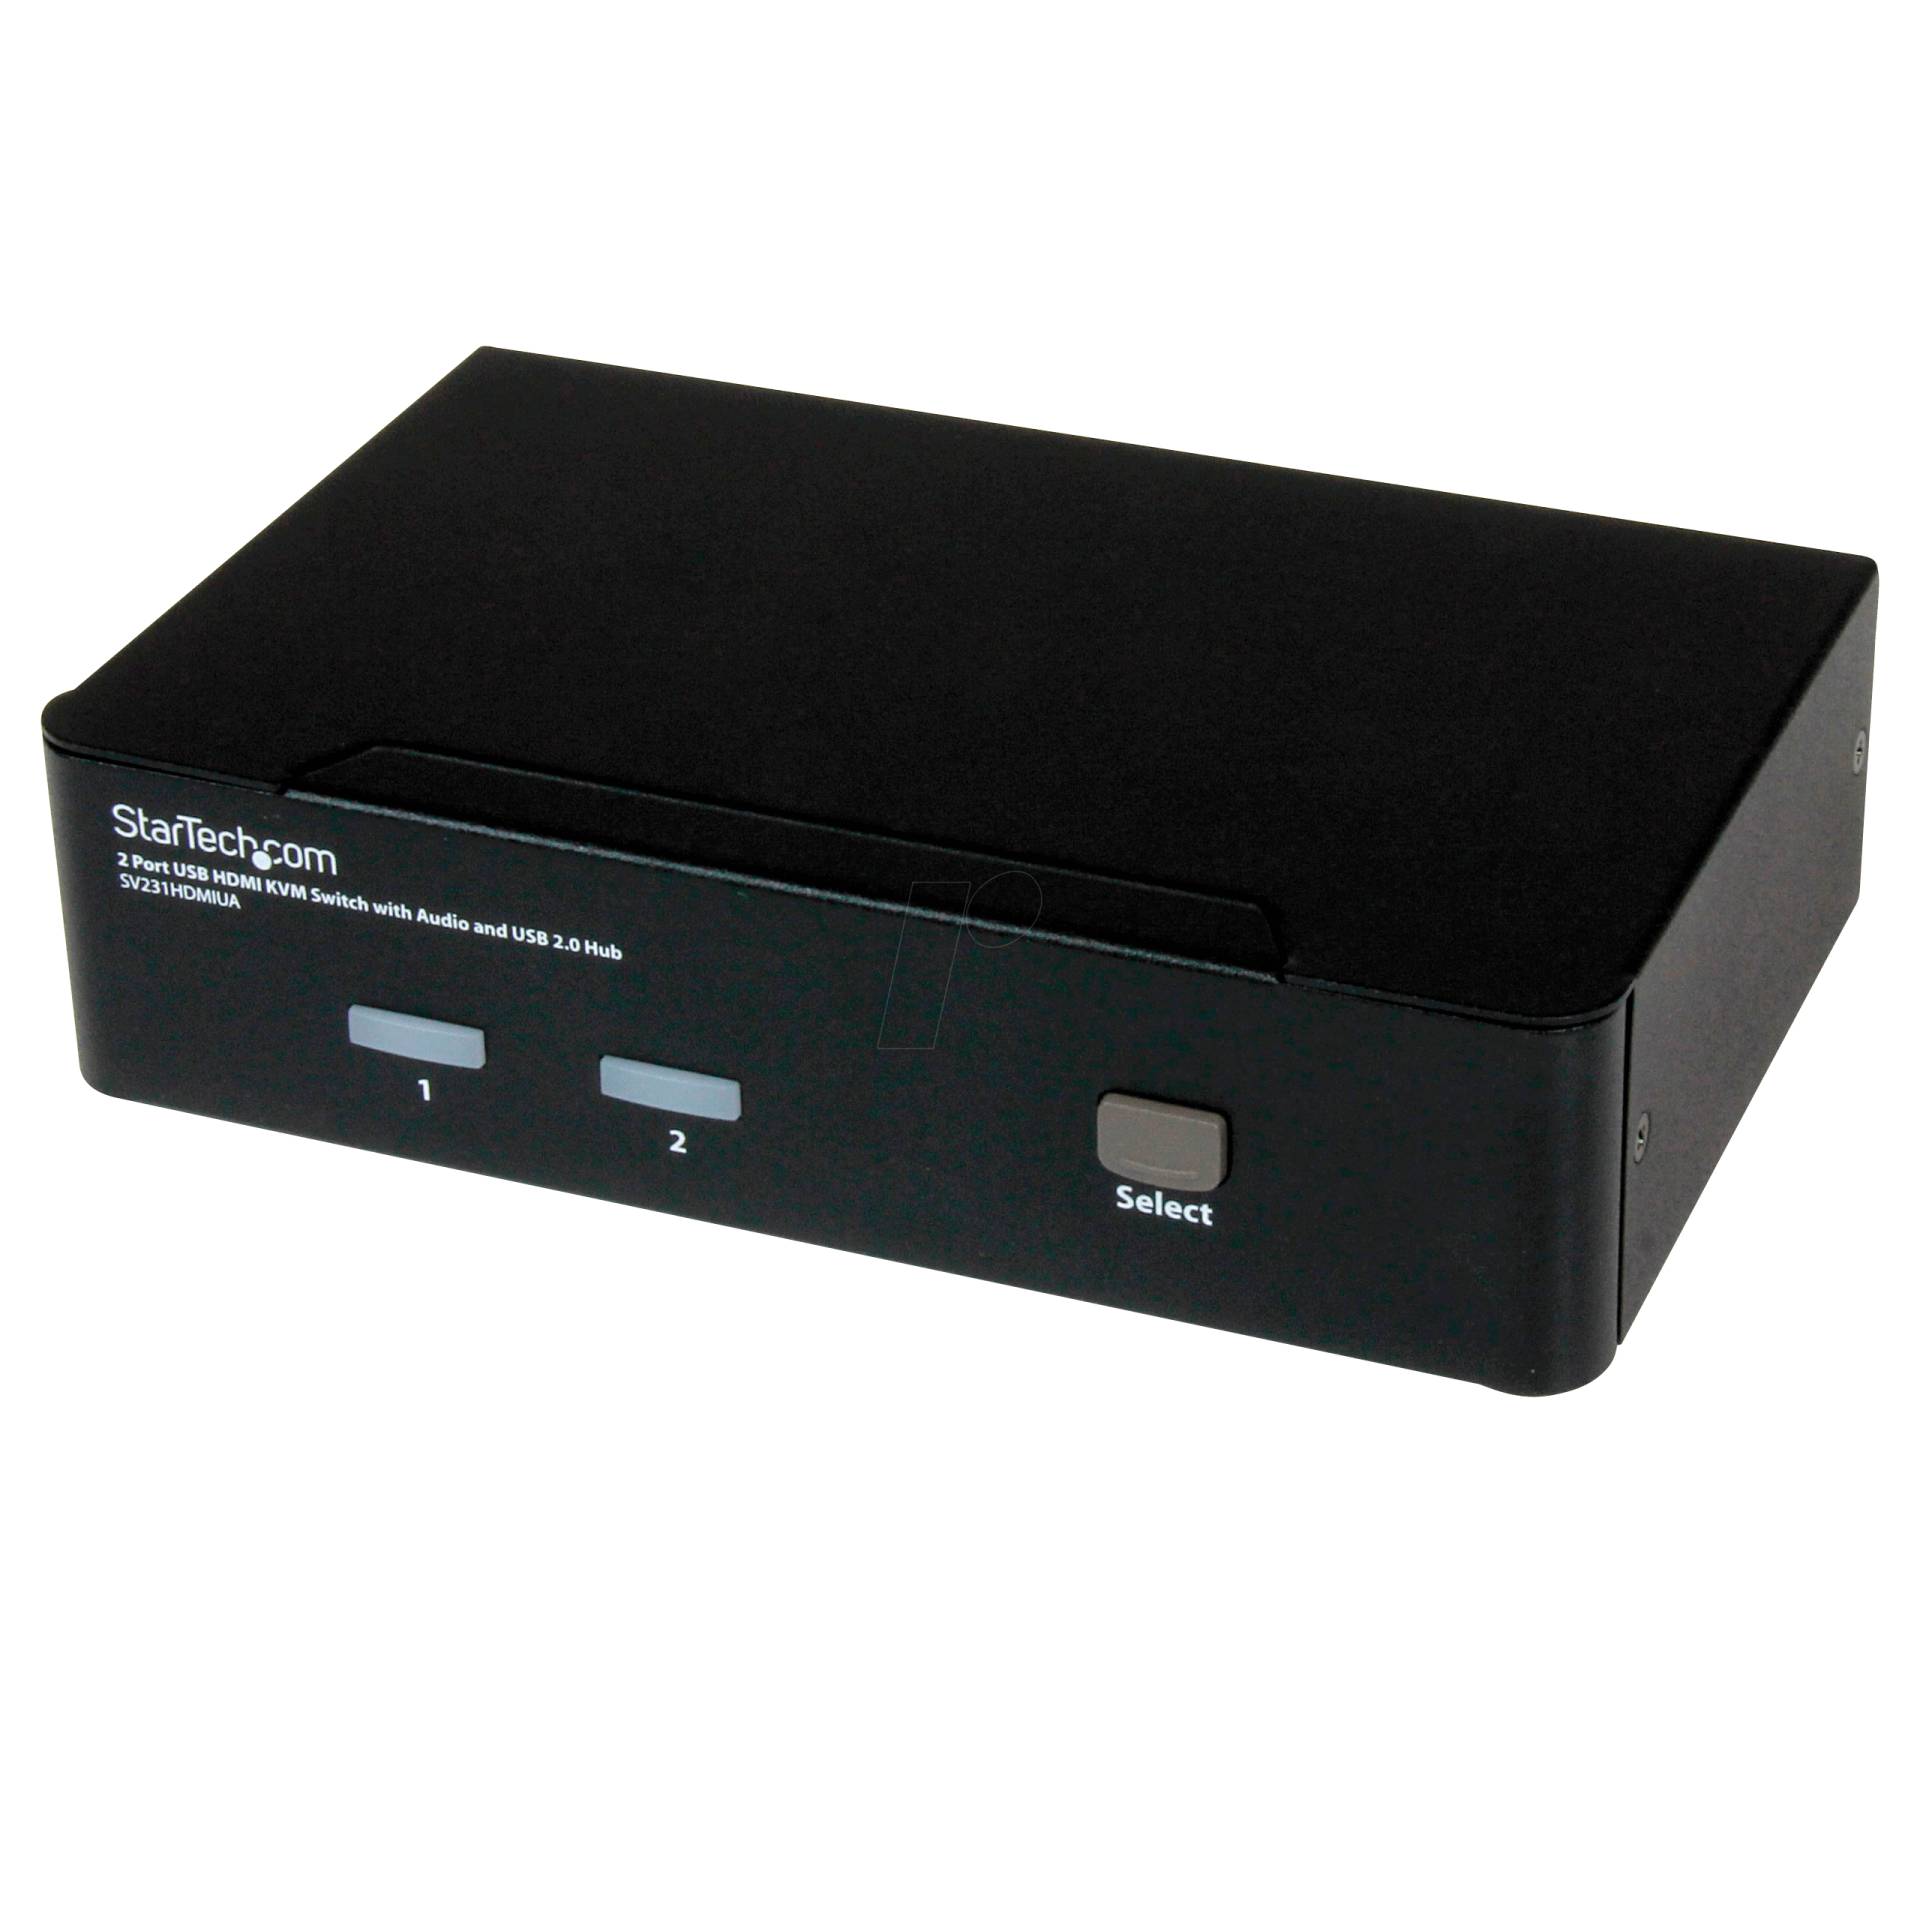 ST SV231HDMIUA - 2 Port USB HDMI KVM Switch von StarTech.com